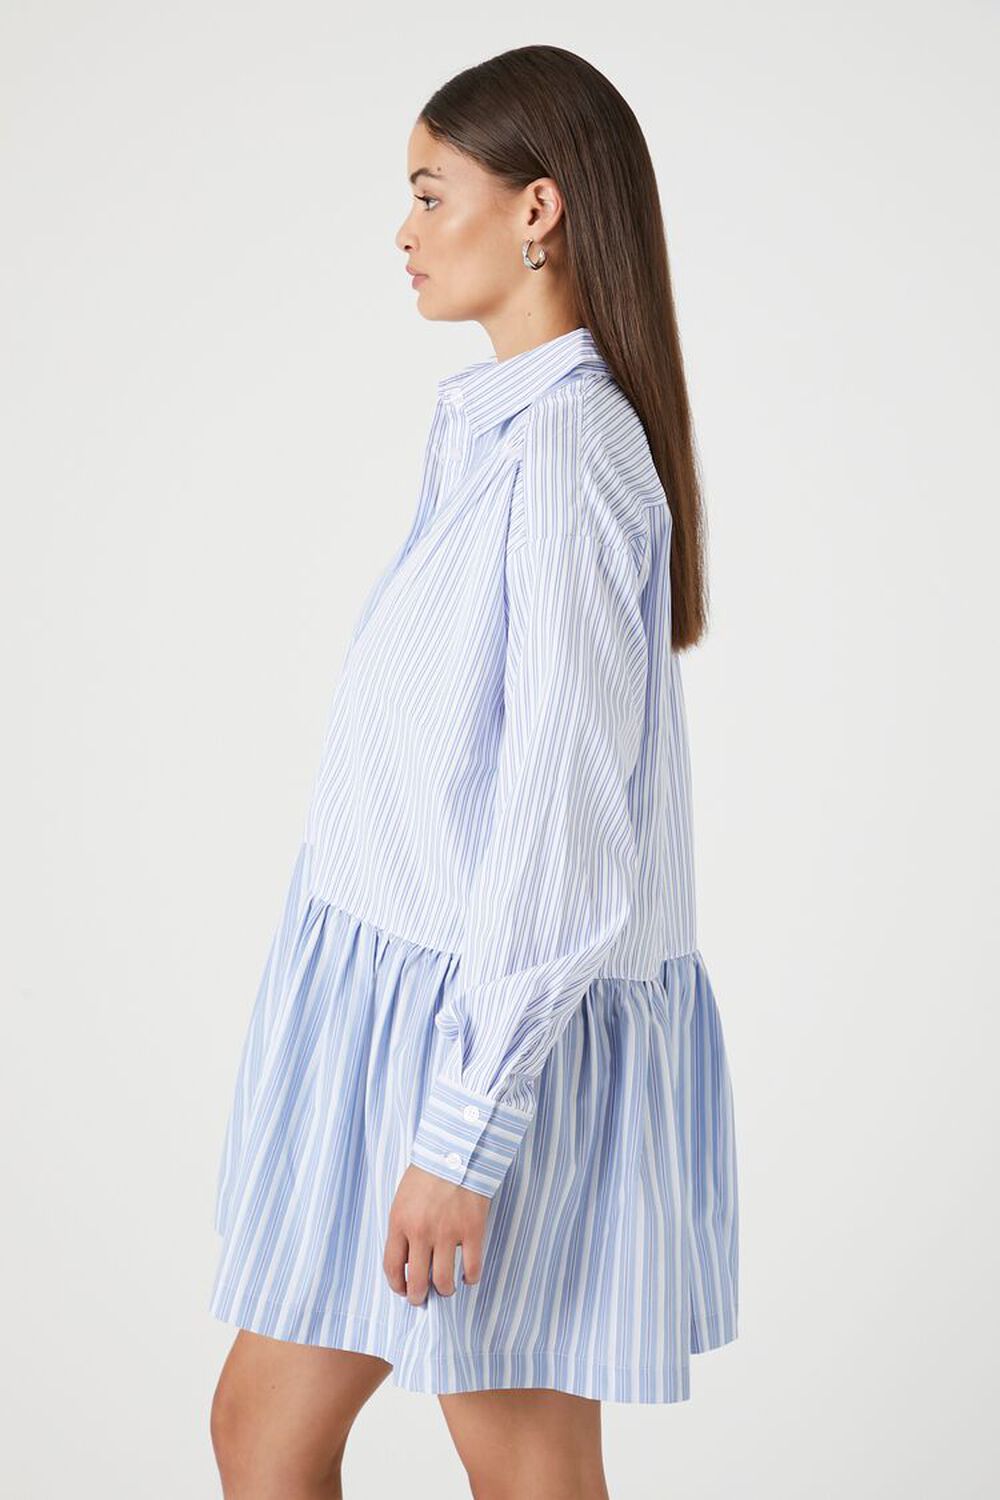 Blue Topaz & Blue Striped Large Bow Shirt Dress (Only $21!)